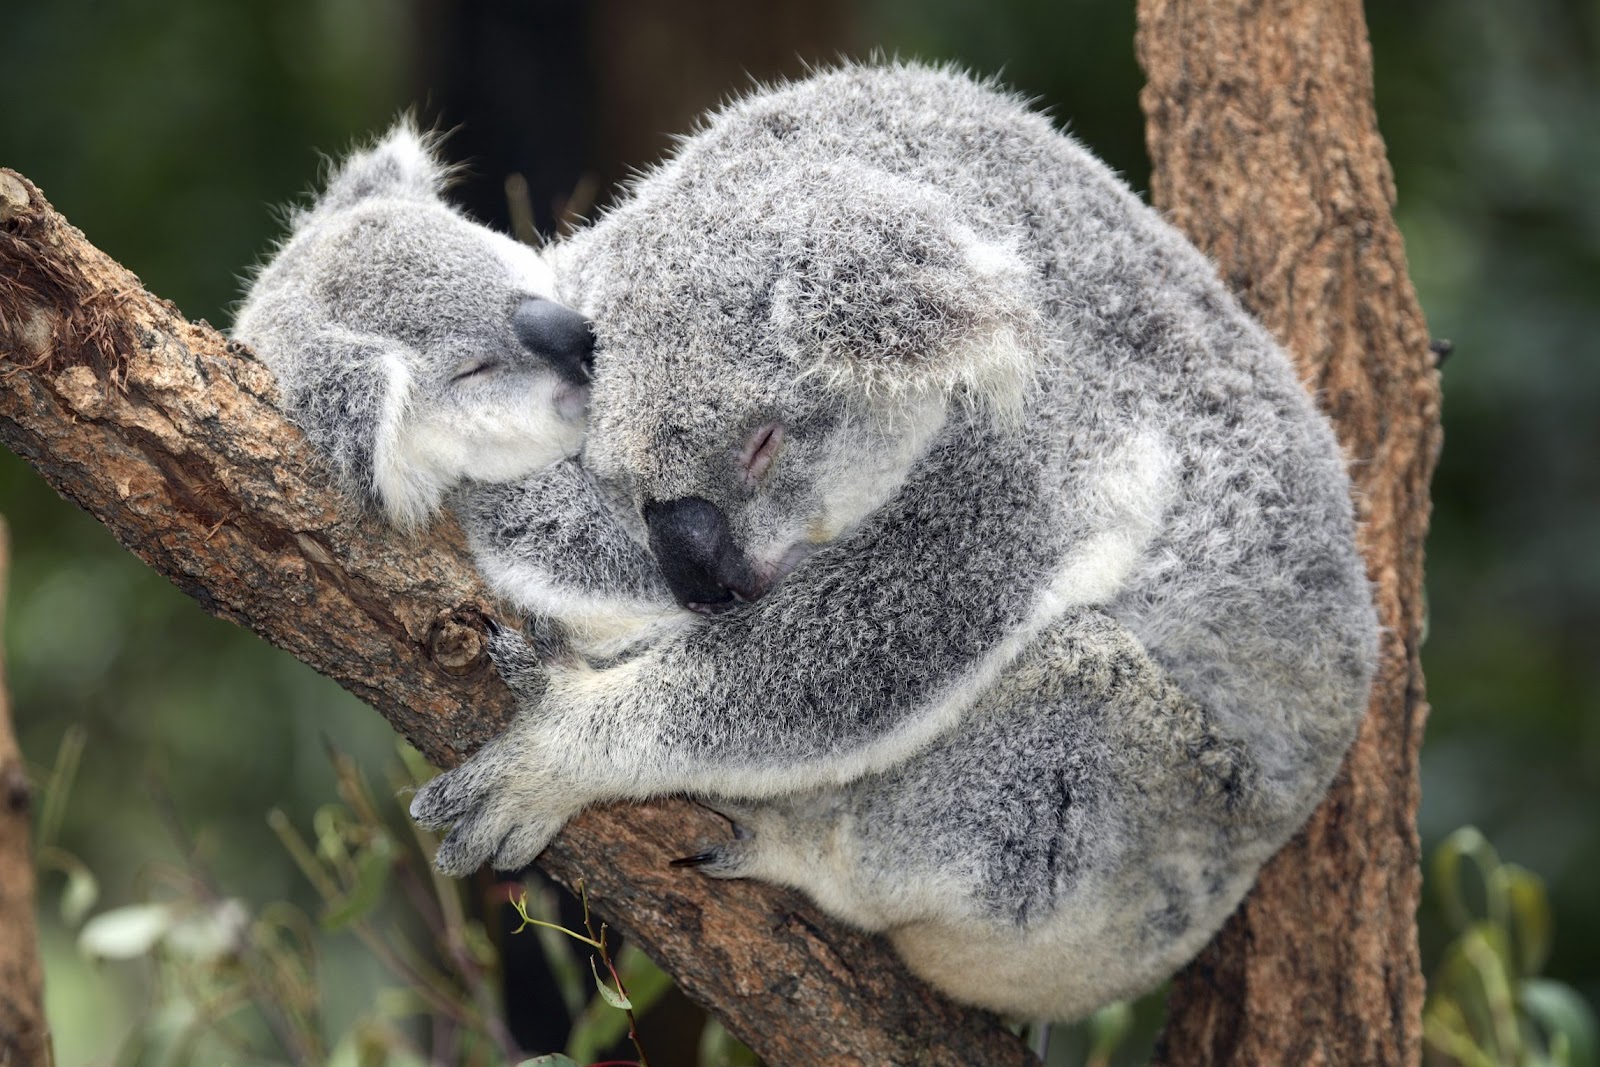 Download anywallpapers here: Cute Koala Bear HD Wallpapers